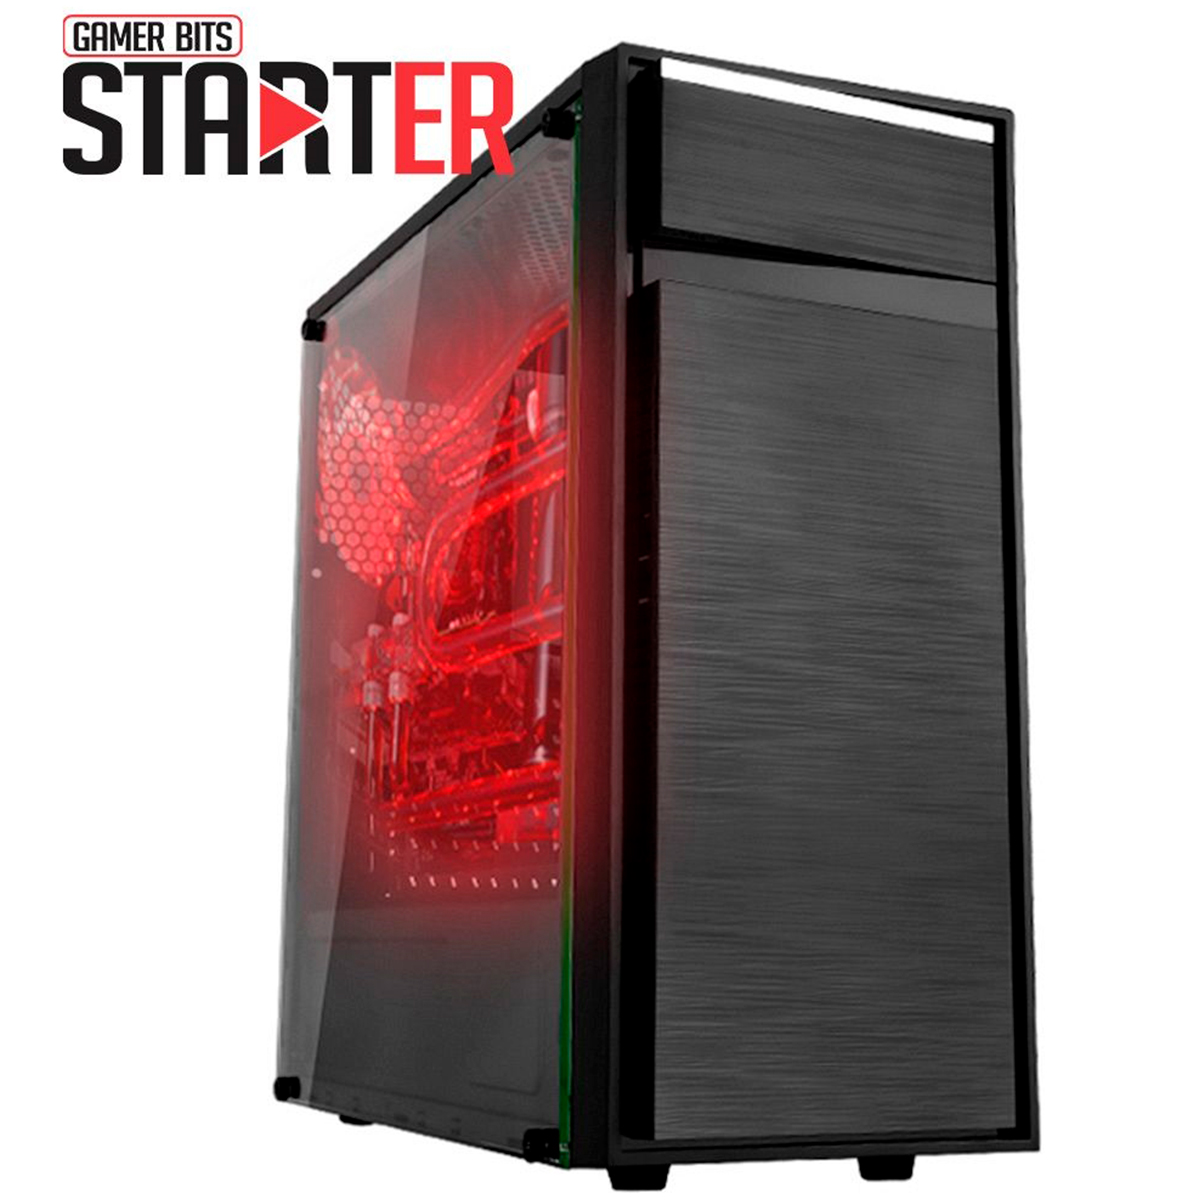 PC Gamer Bits Starter - AMD FX-4300, 8GB, SSD 240GB, Geforce GTX 550 Ti